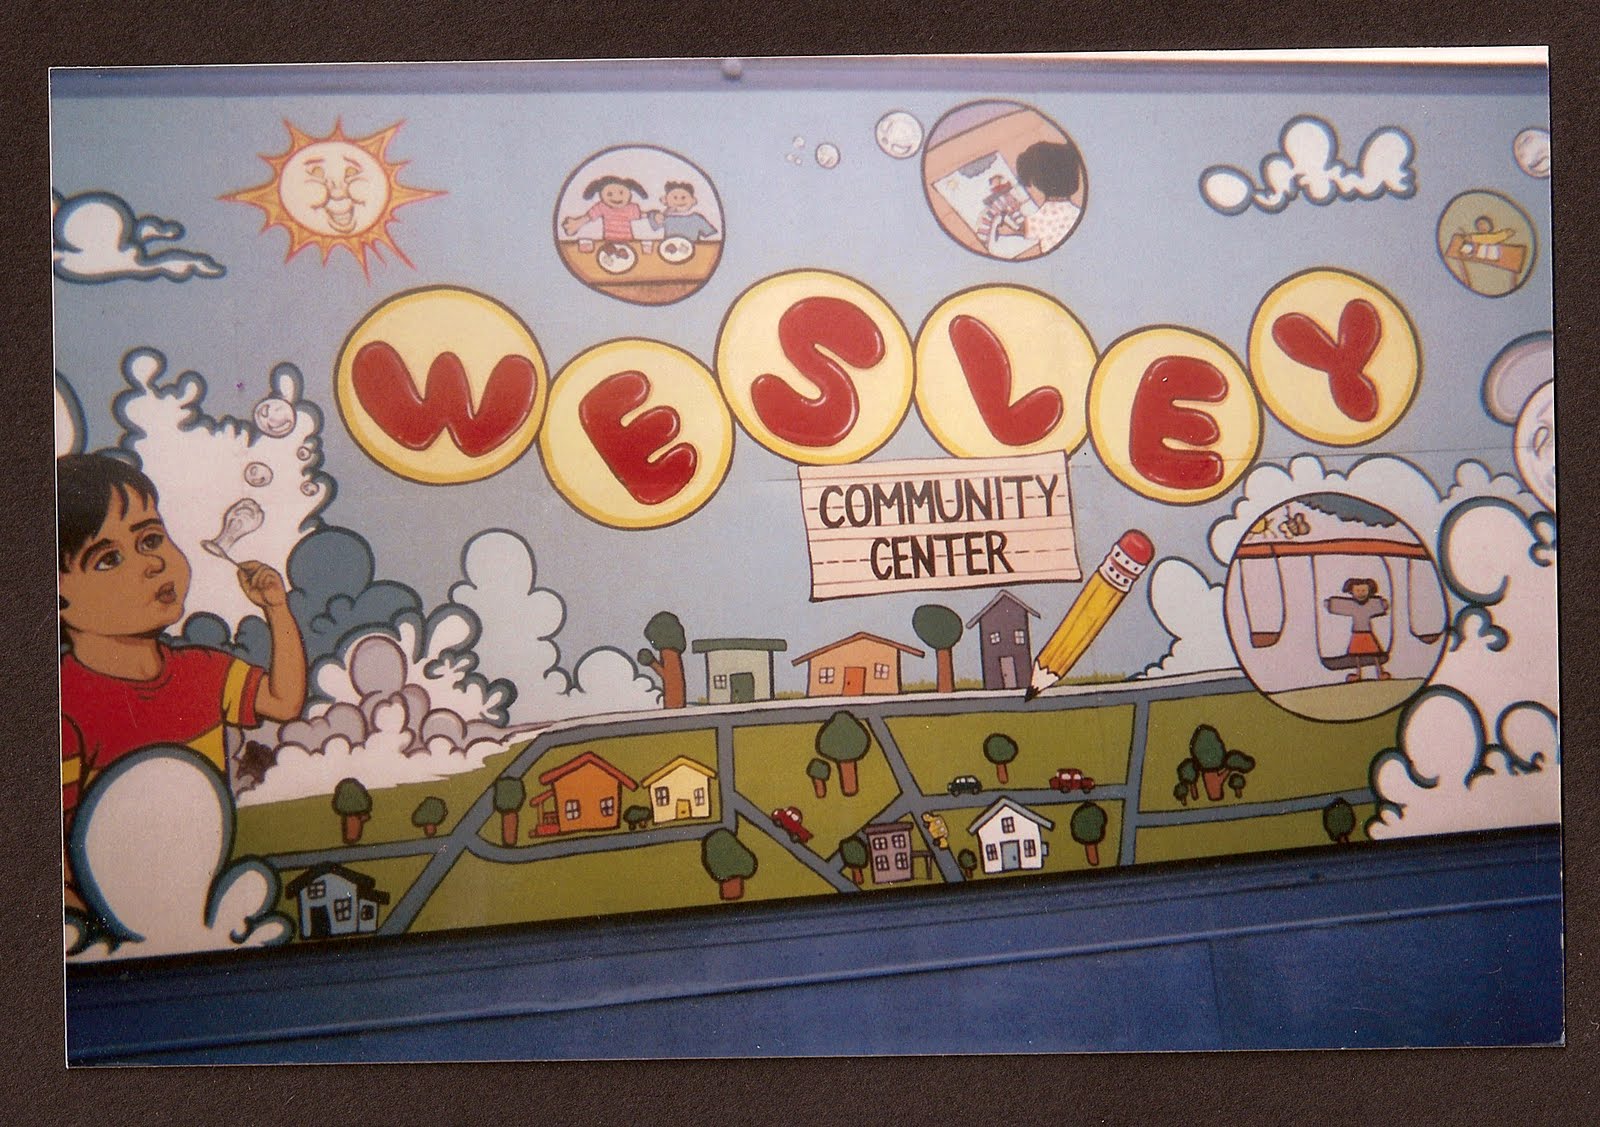 Wesley Community Center